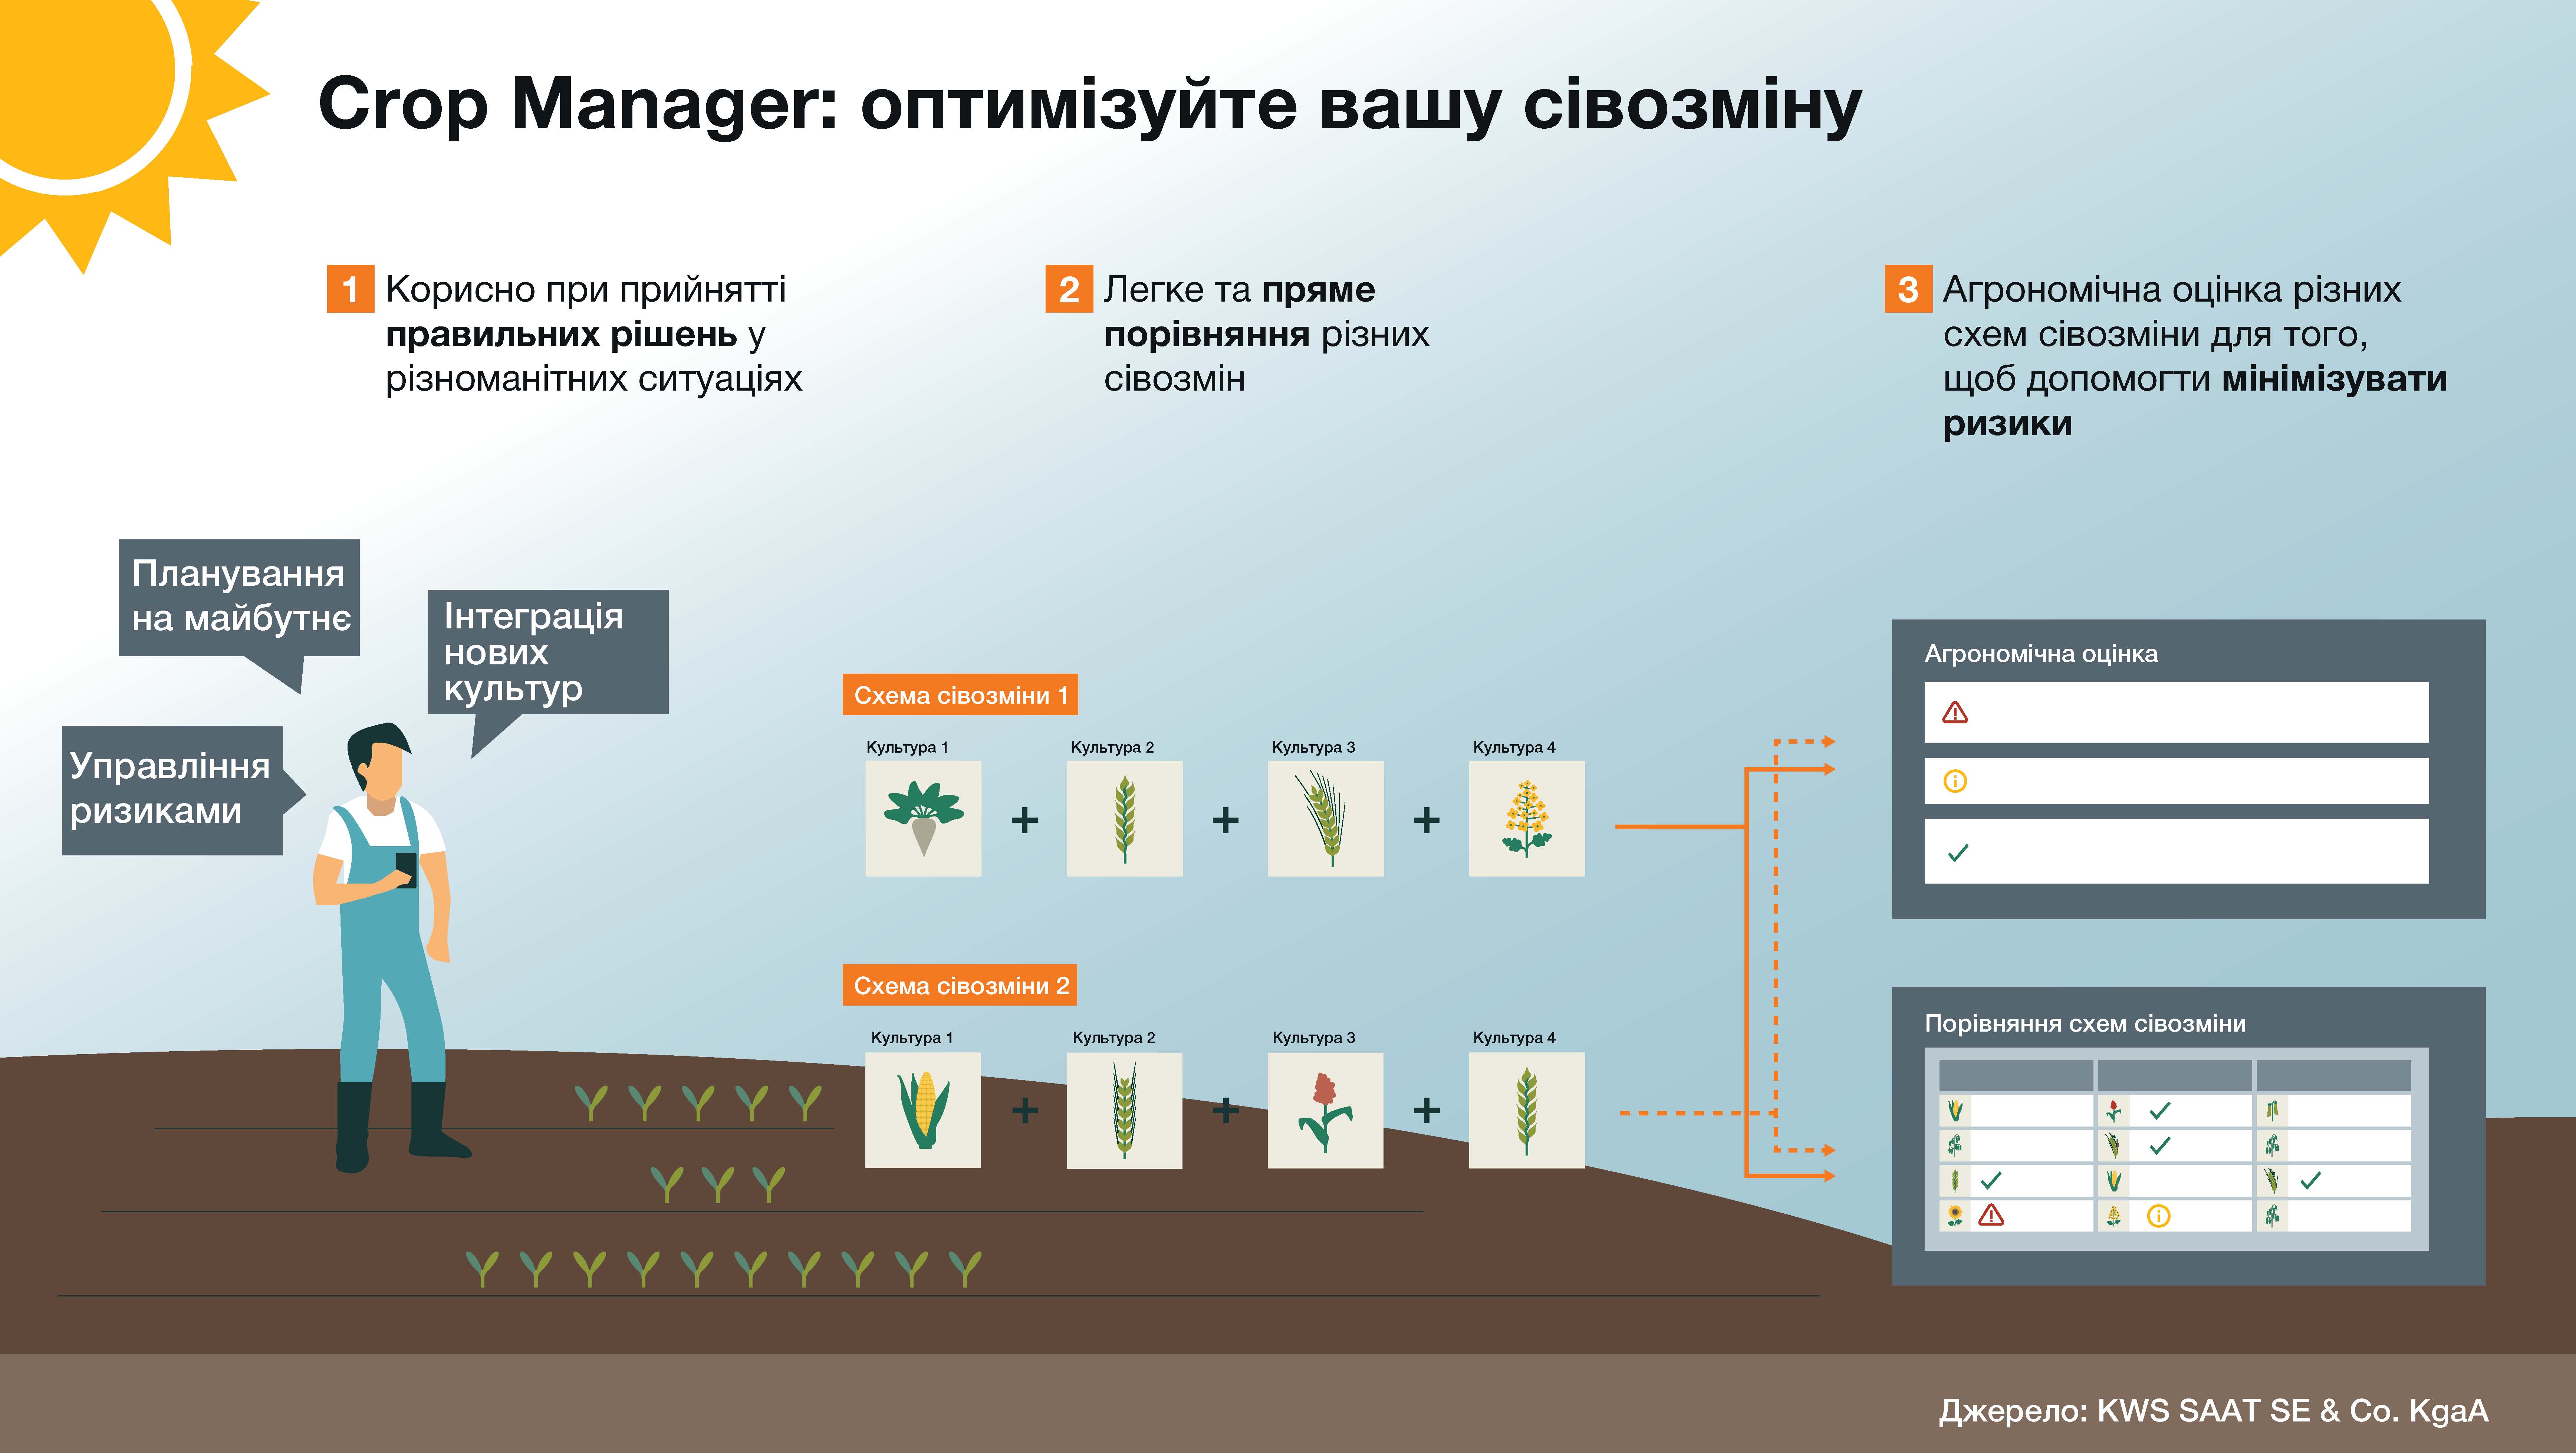 210201_kws_crop_manager_cmyk_ukr.jpg